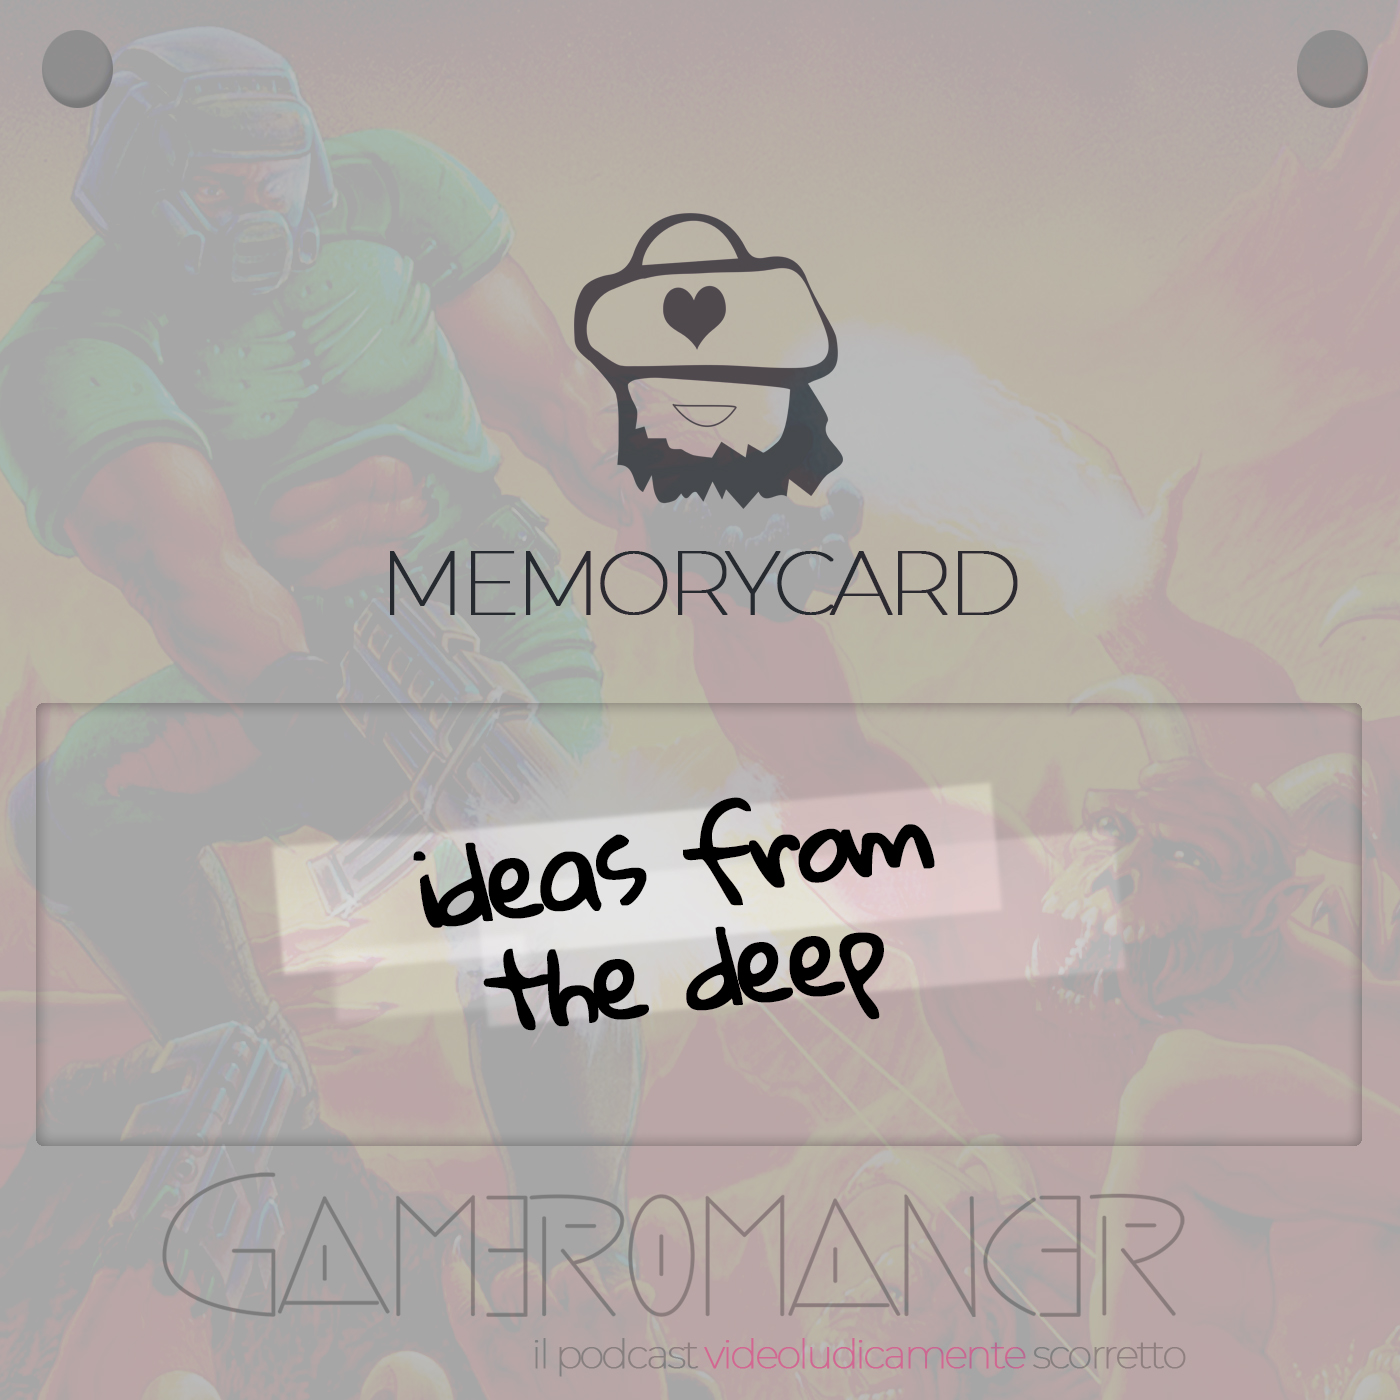 MemoryCard: ideas from the deep